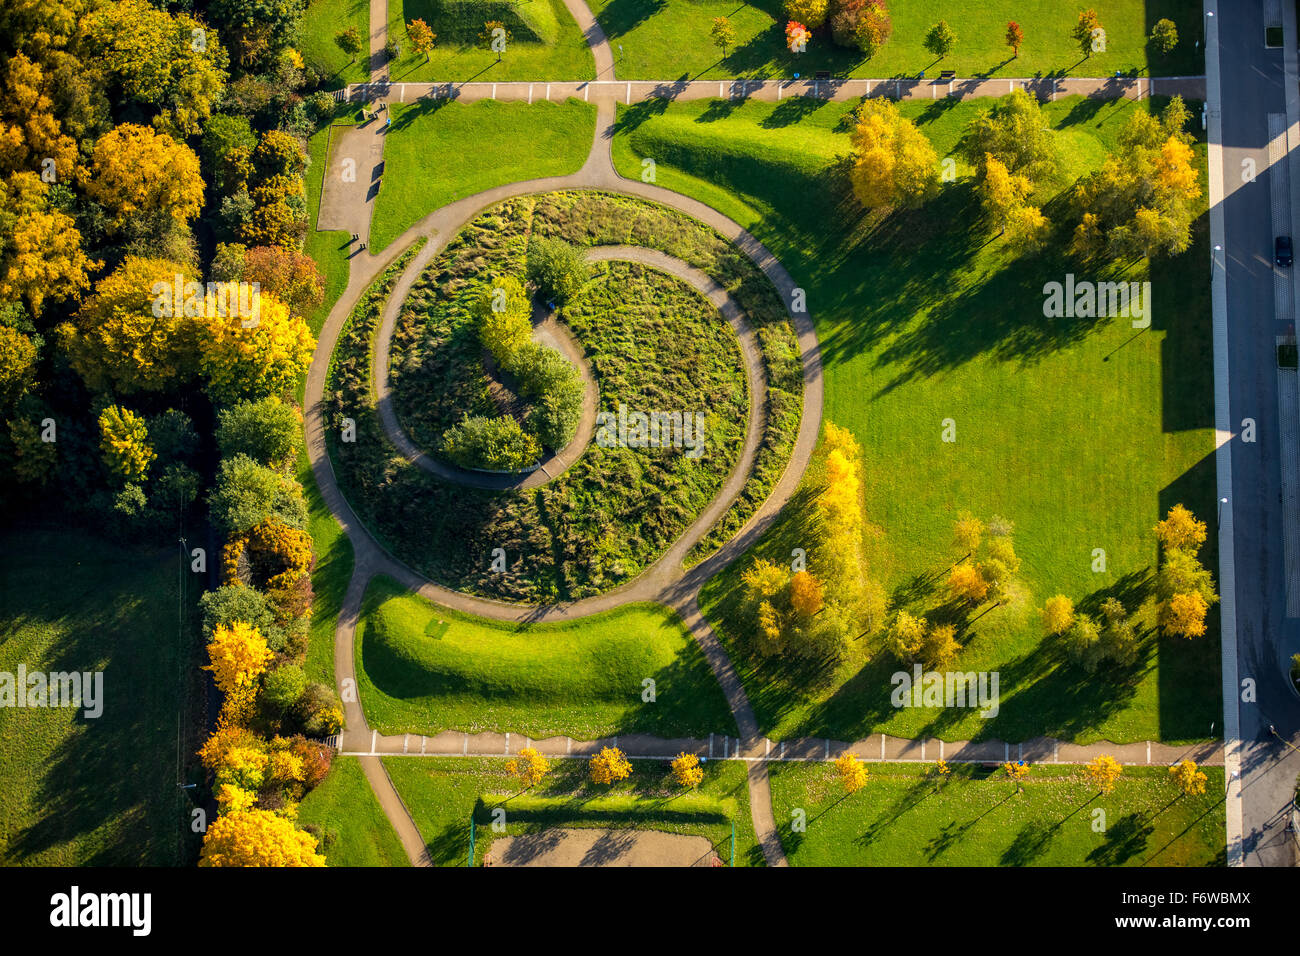 ying yang sign, Dilldorfer height Kupferdreh, garden, landmark, Essen, Ruhr area, North rhine westphalia, Germany, Europe, Aeria Stock Photo